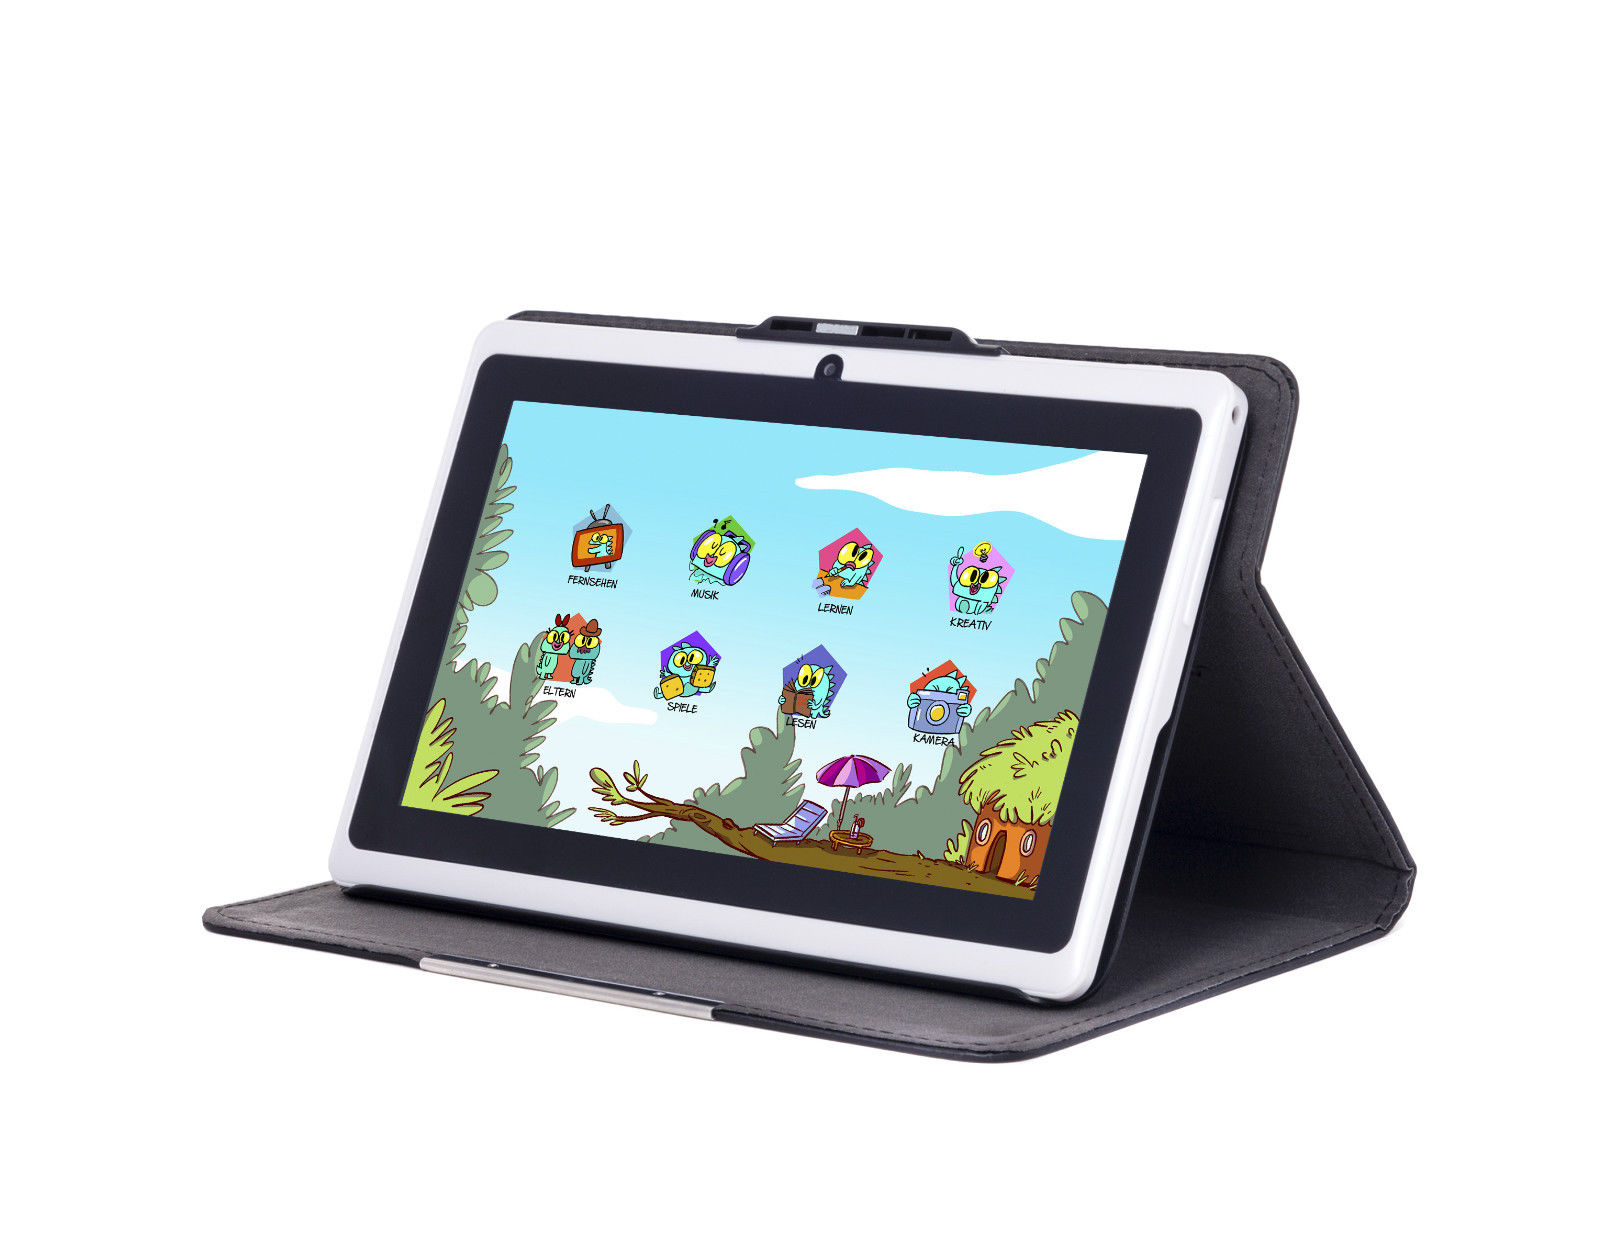 Snakebyte Kids Tablet f2 (Weiß) - 7 Zoll Android basiertes Tablet für Kinder